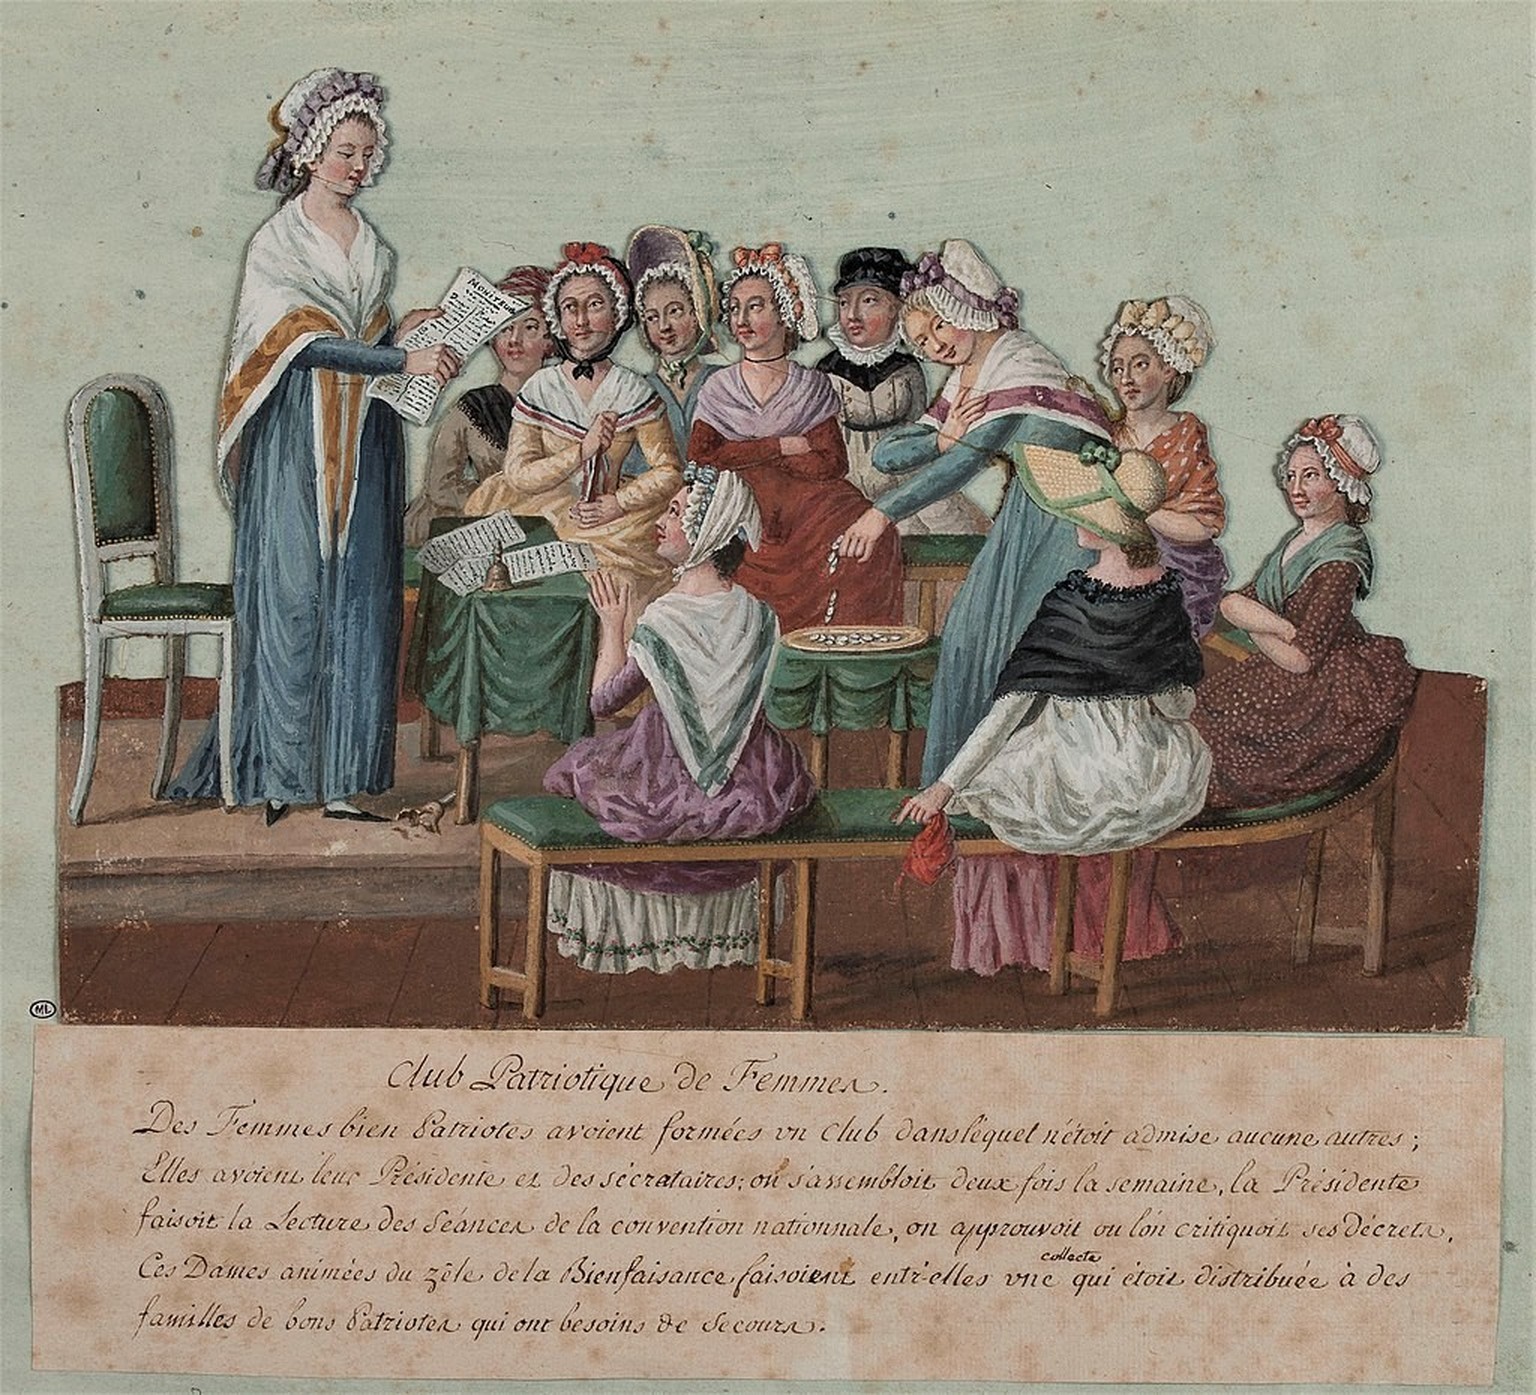 Eine Versammlung des Club Patriotique de Femmes, Jean-Baptiste Lesueur, ca. 1792-1794.
https://nl.wikipedia.org/wiki/Etta_Palm#/media/Bestand:Lesueur_-_Club_Patriotique_de_Femmes.jpg